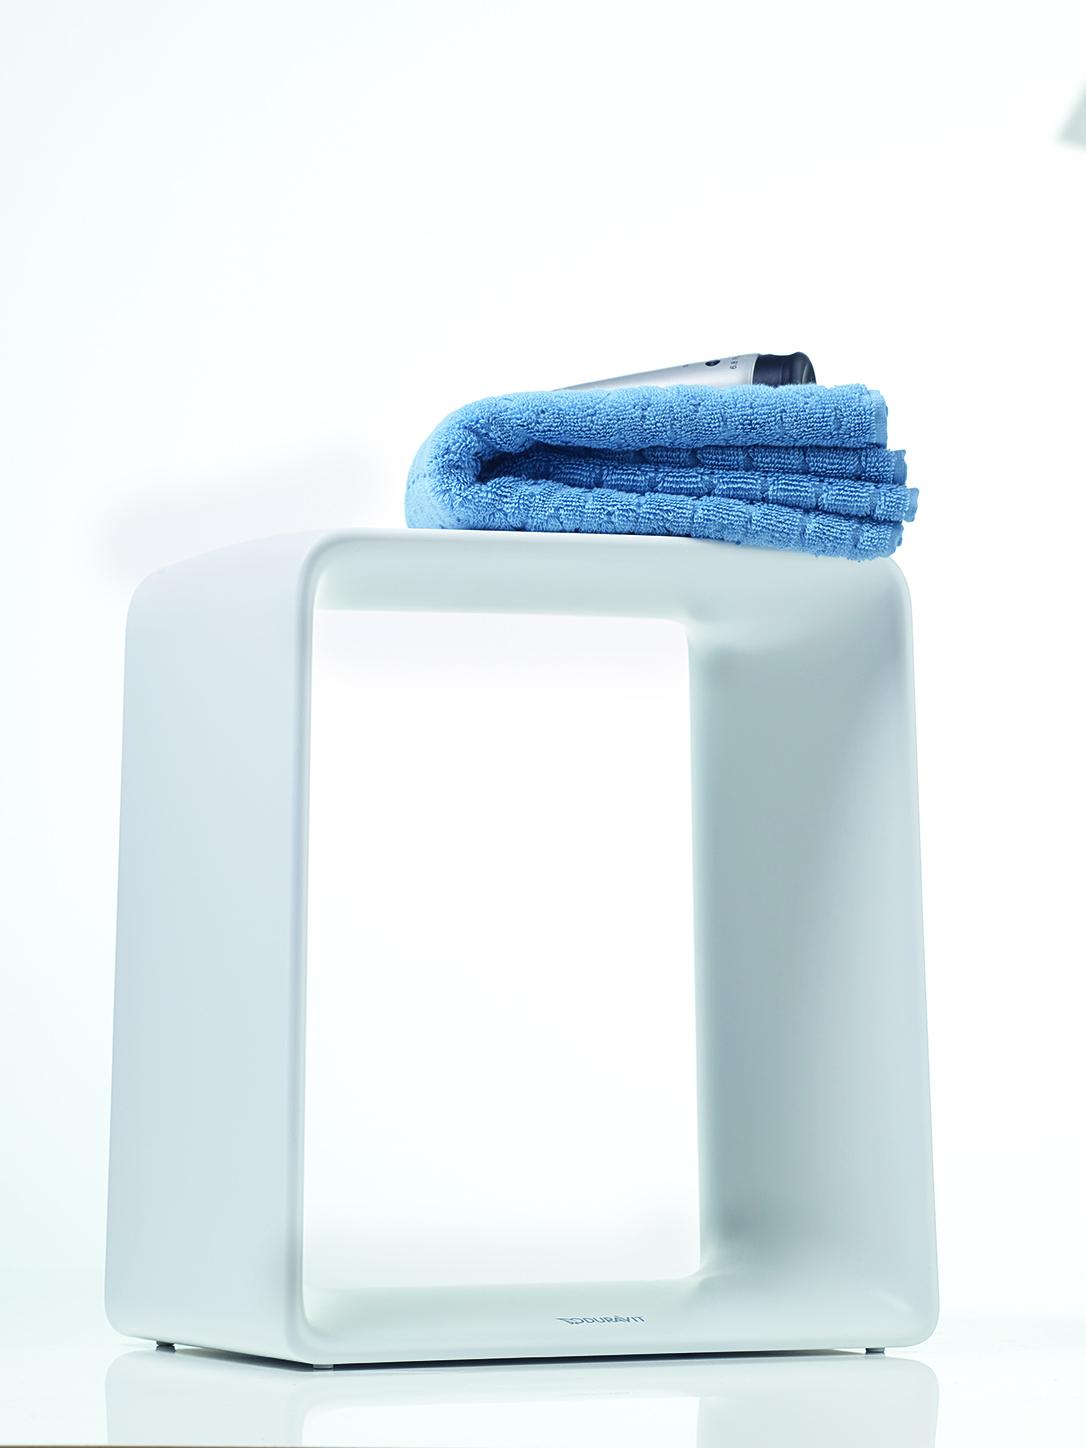 Sgabelli da doccia, oggetti di design belli, comodi e sicuri - Cose di Casa